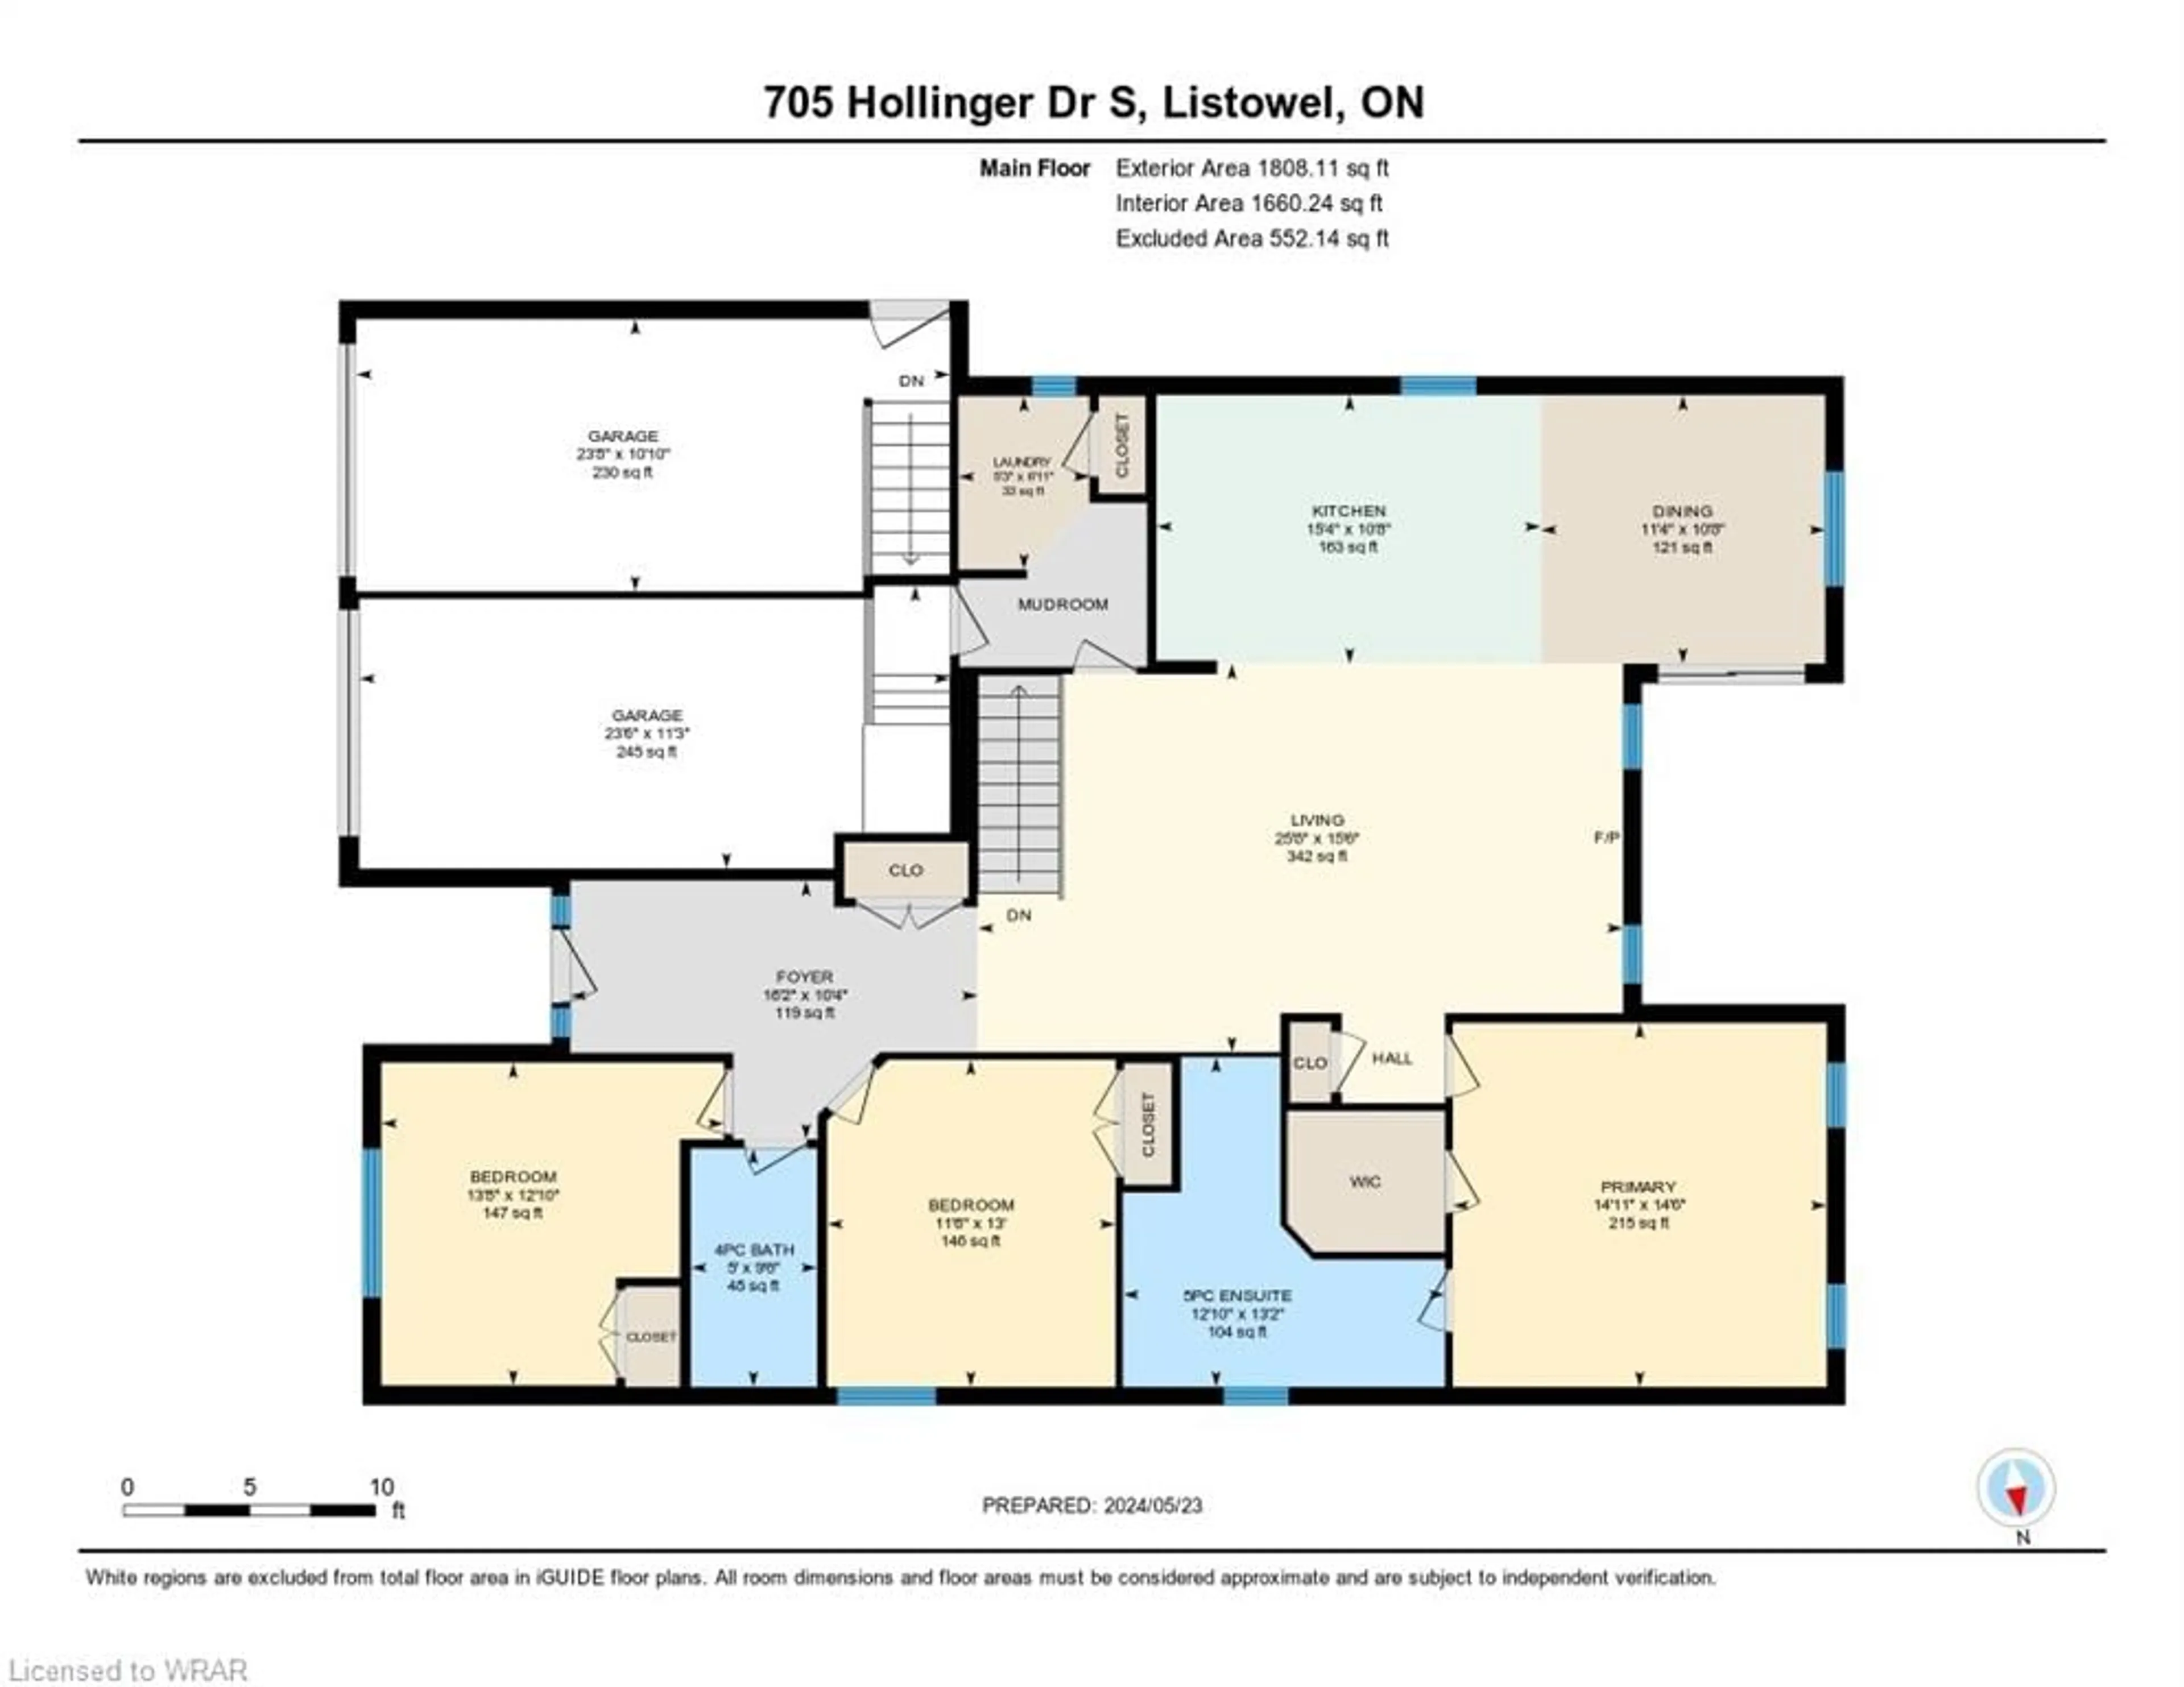 Floor plan for 705 Hollinger Dr, Listowel Ontario N4W 3V2